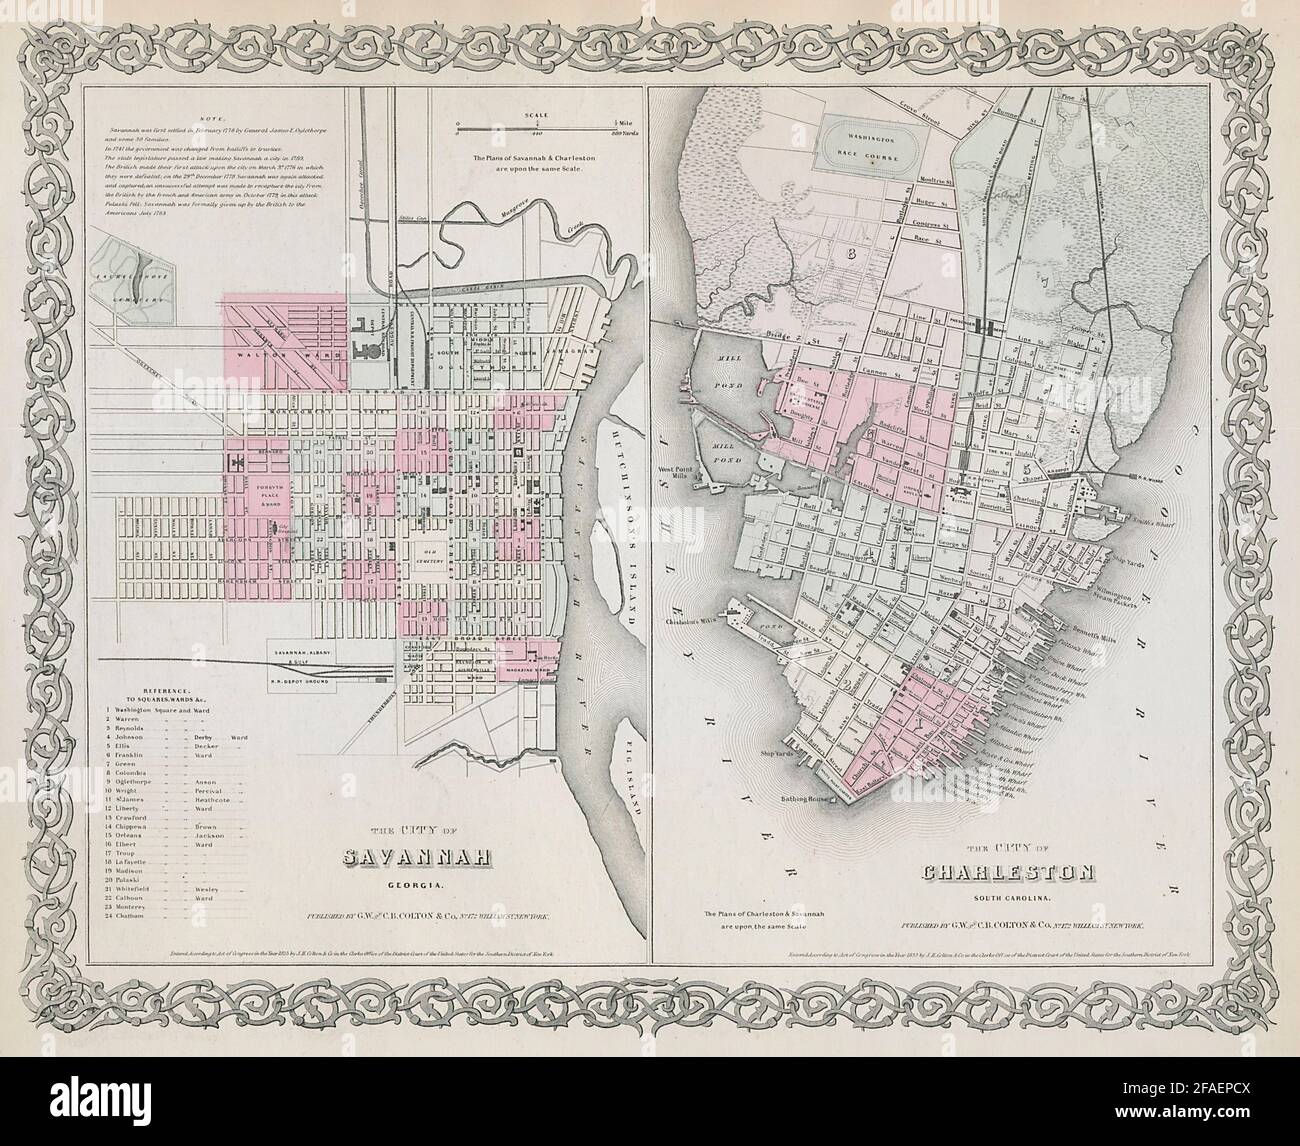 Savannah, Georgia & Charleston, South Carolina Antiker Stadtplan COLTON 1869 Karte Stockfoto